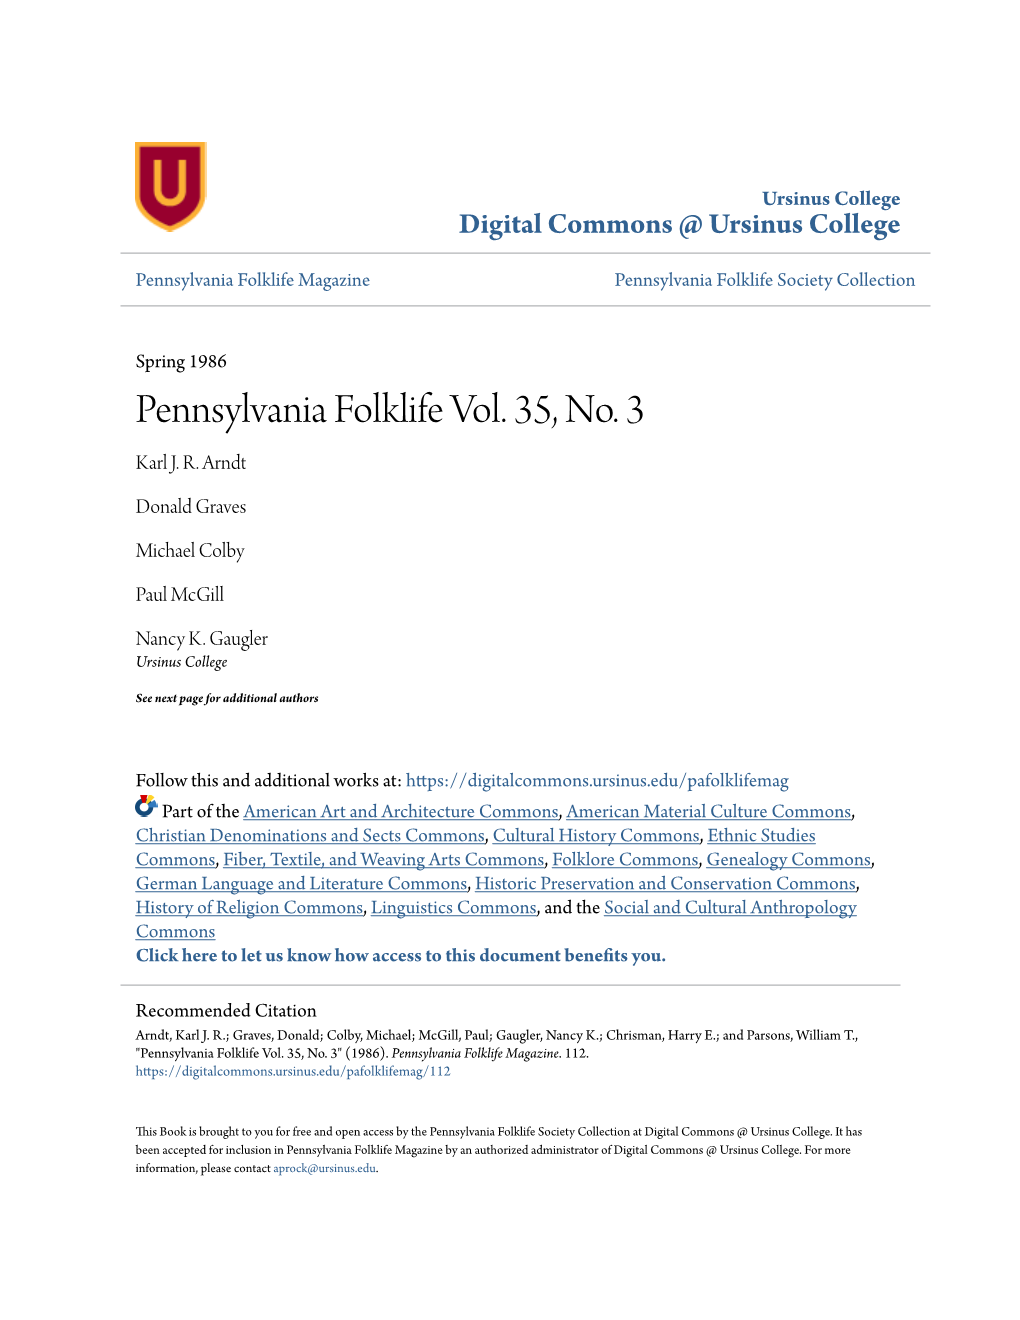 Pennsylvania Folklife Vol. 35, No. 3 Karl J